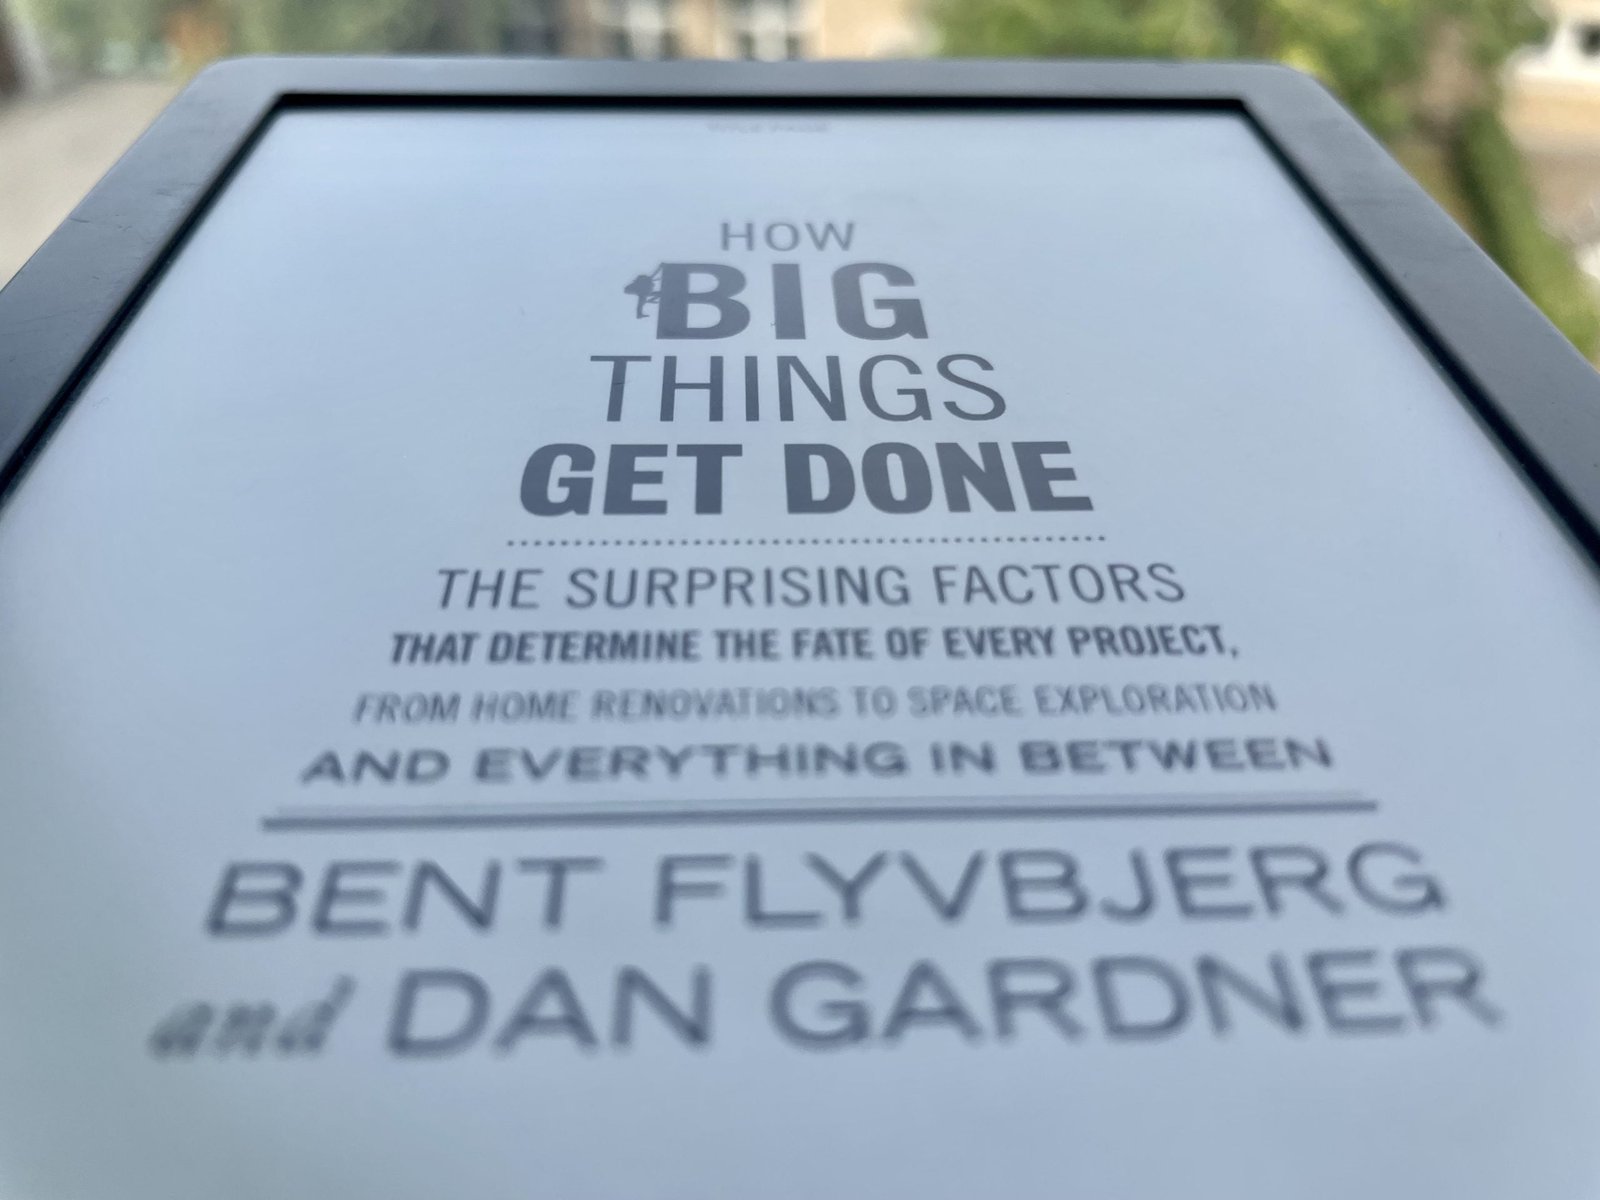 Bespreking van “How Big Things Get Done” van Bent Flyvbjerg